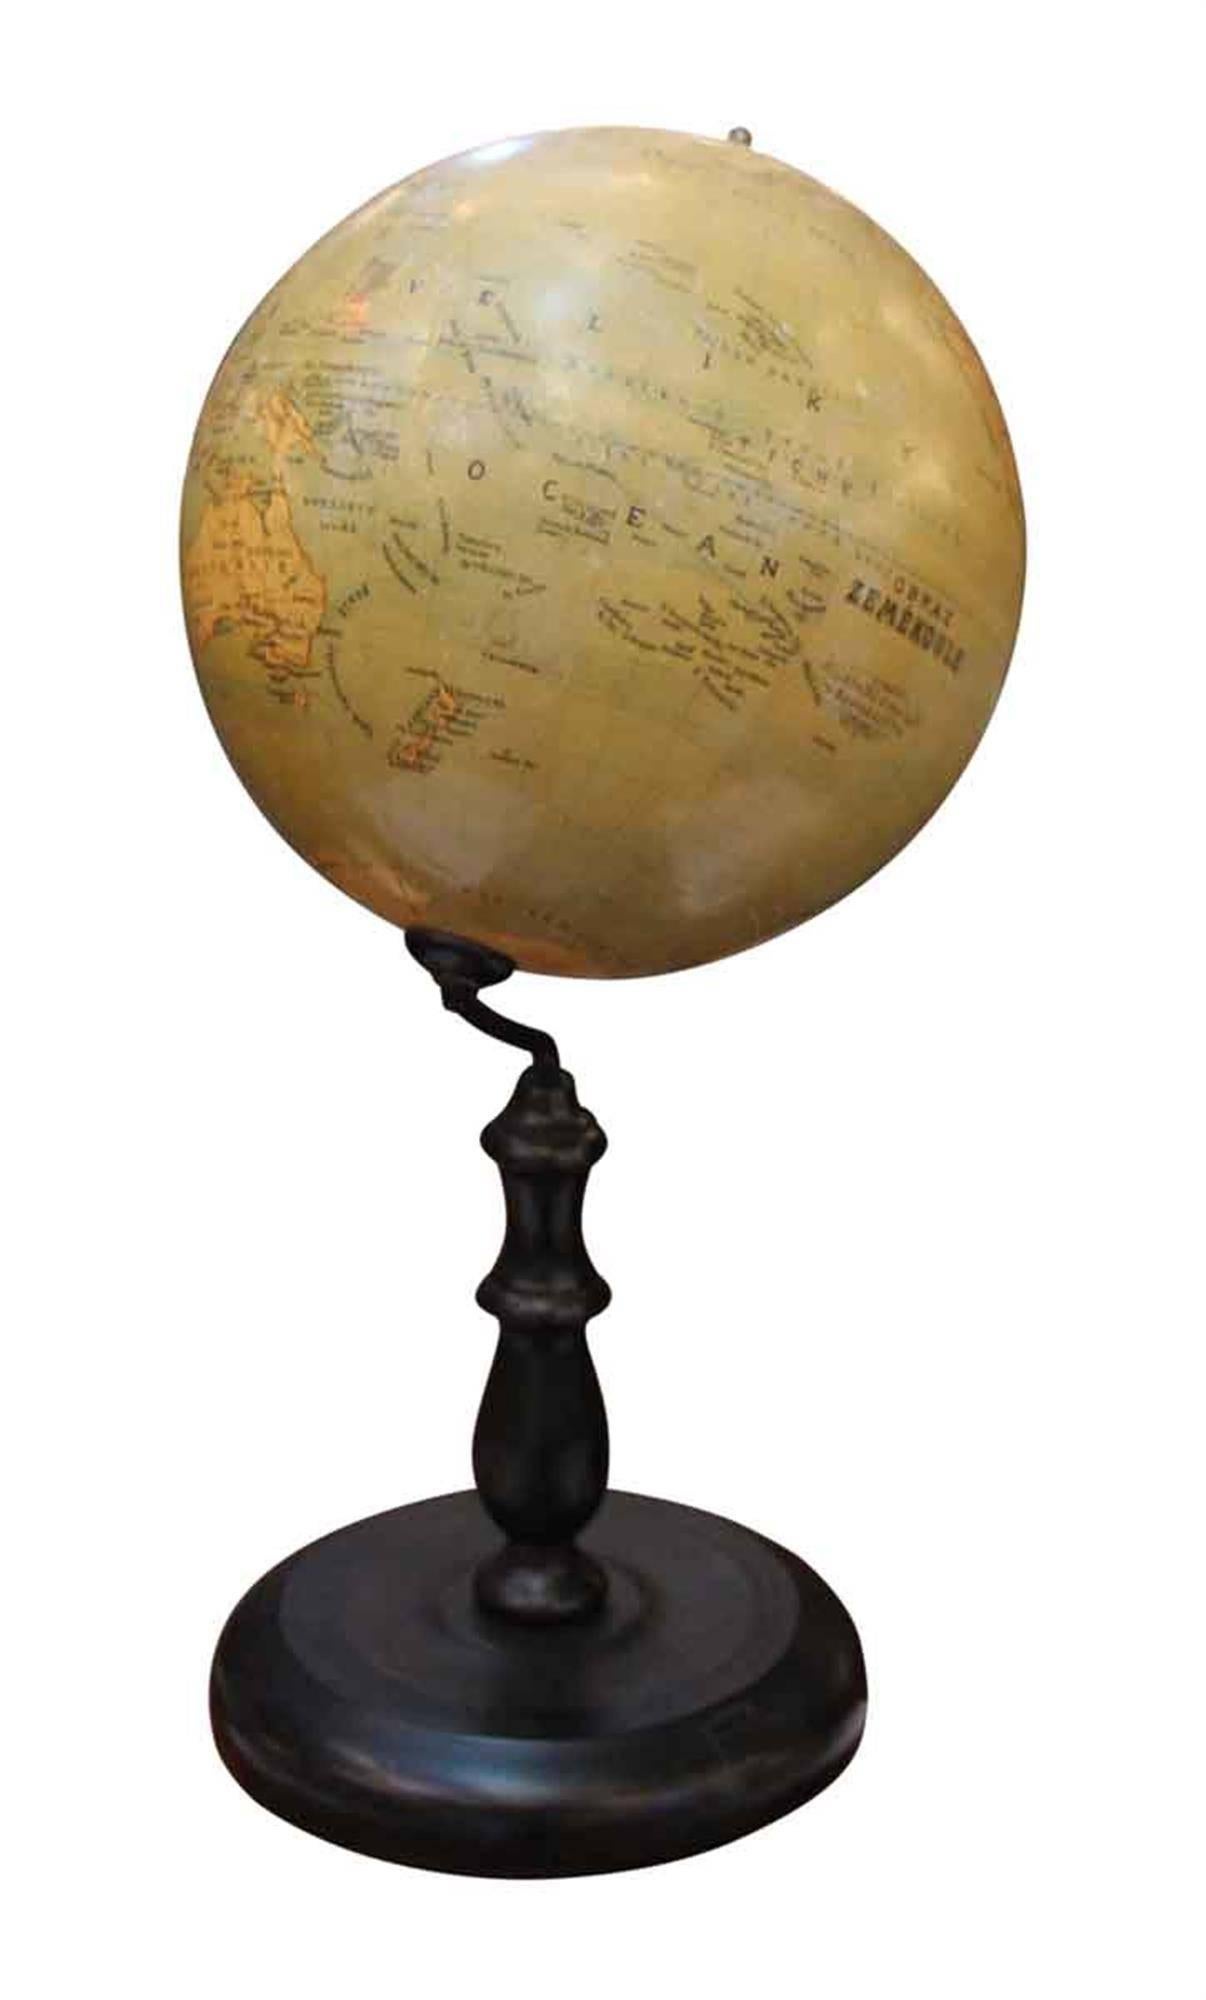 Wooden base tabletop 1880s Obraz Zemekoule terrestrial world Globe. This unusual globe, whose name translates to 